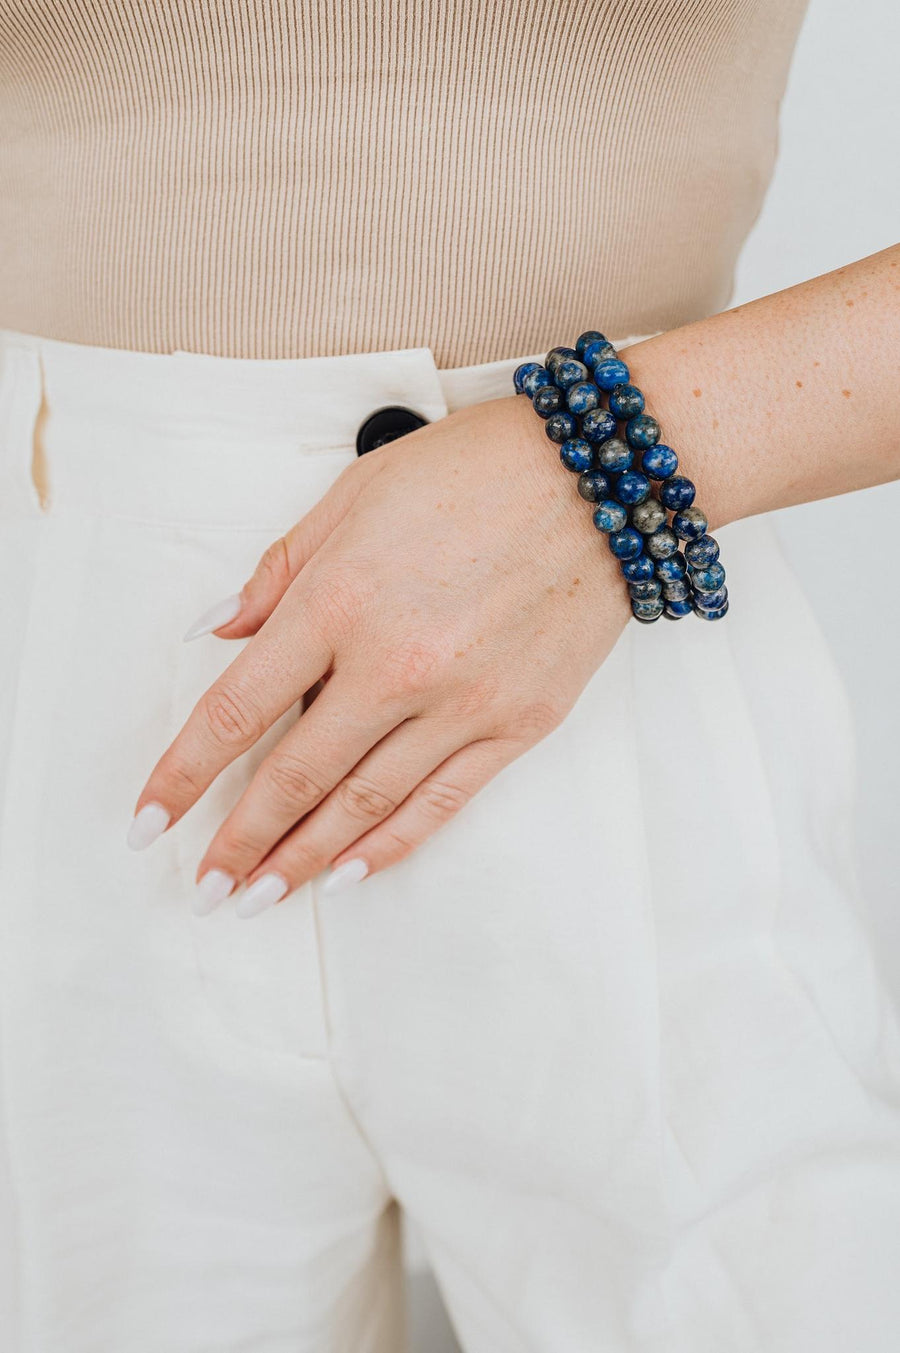 Lapis Lazuli beaded bracelet